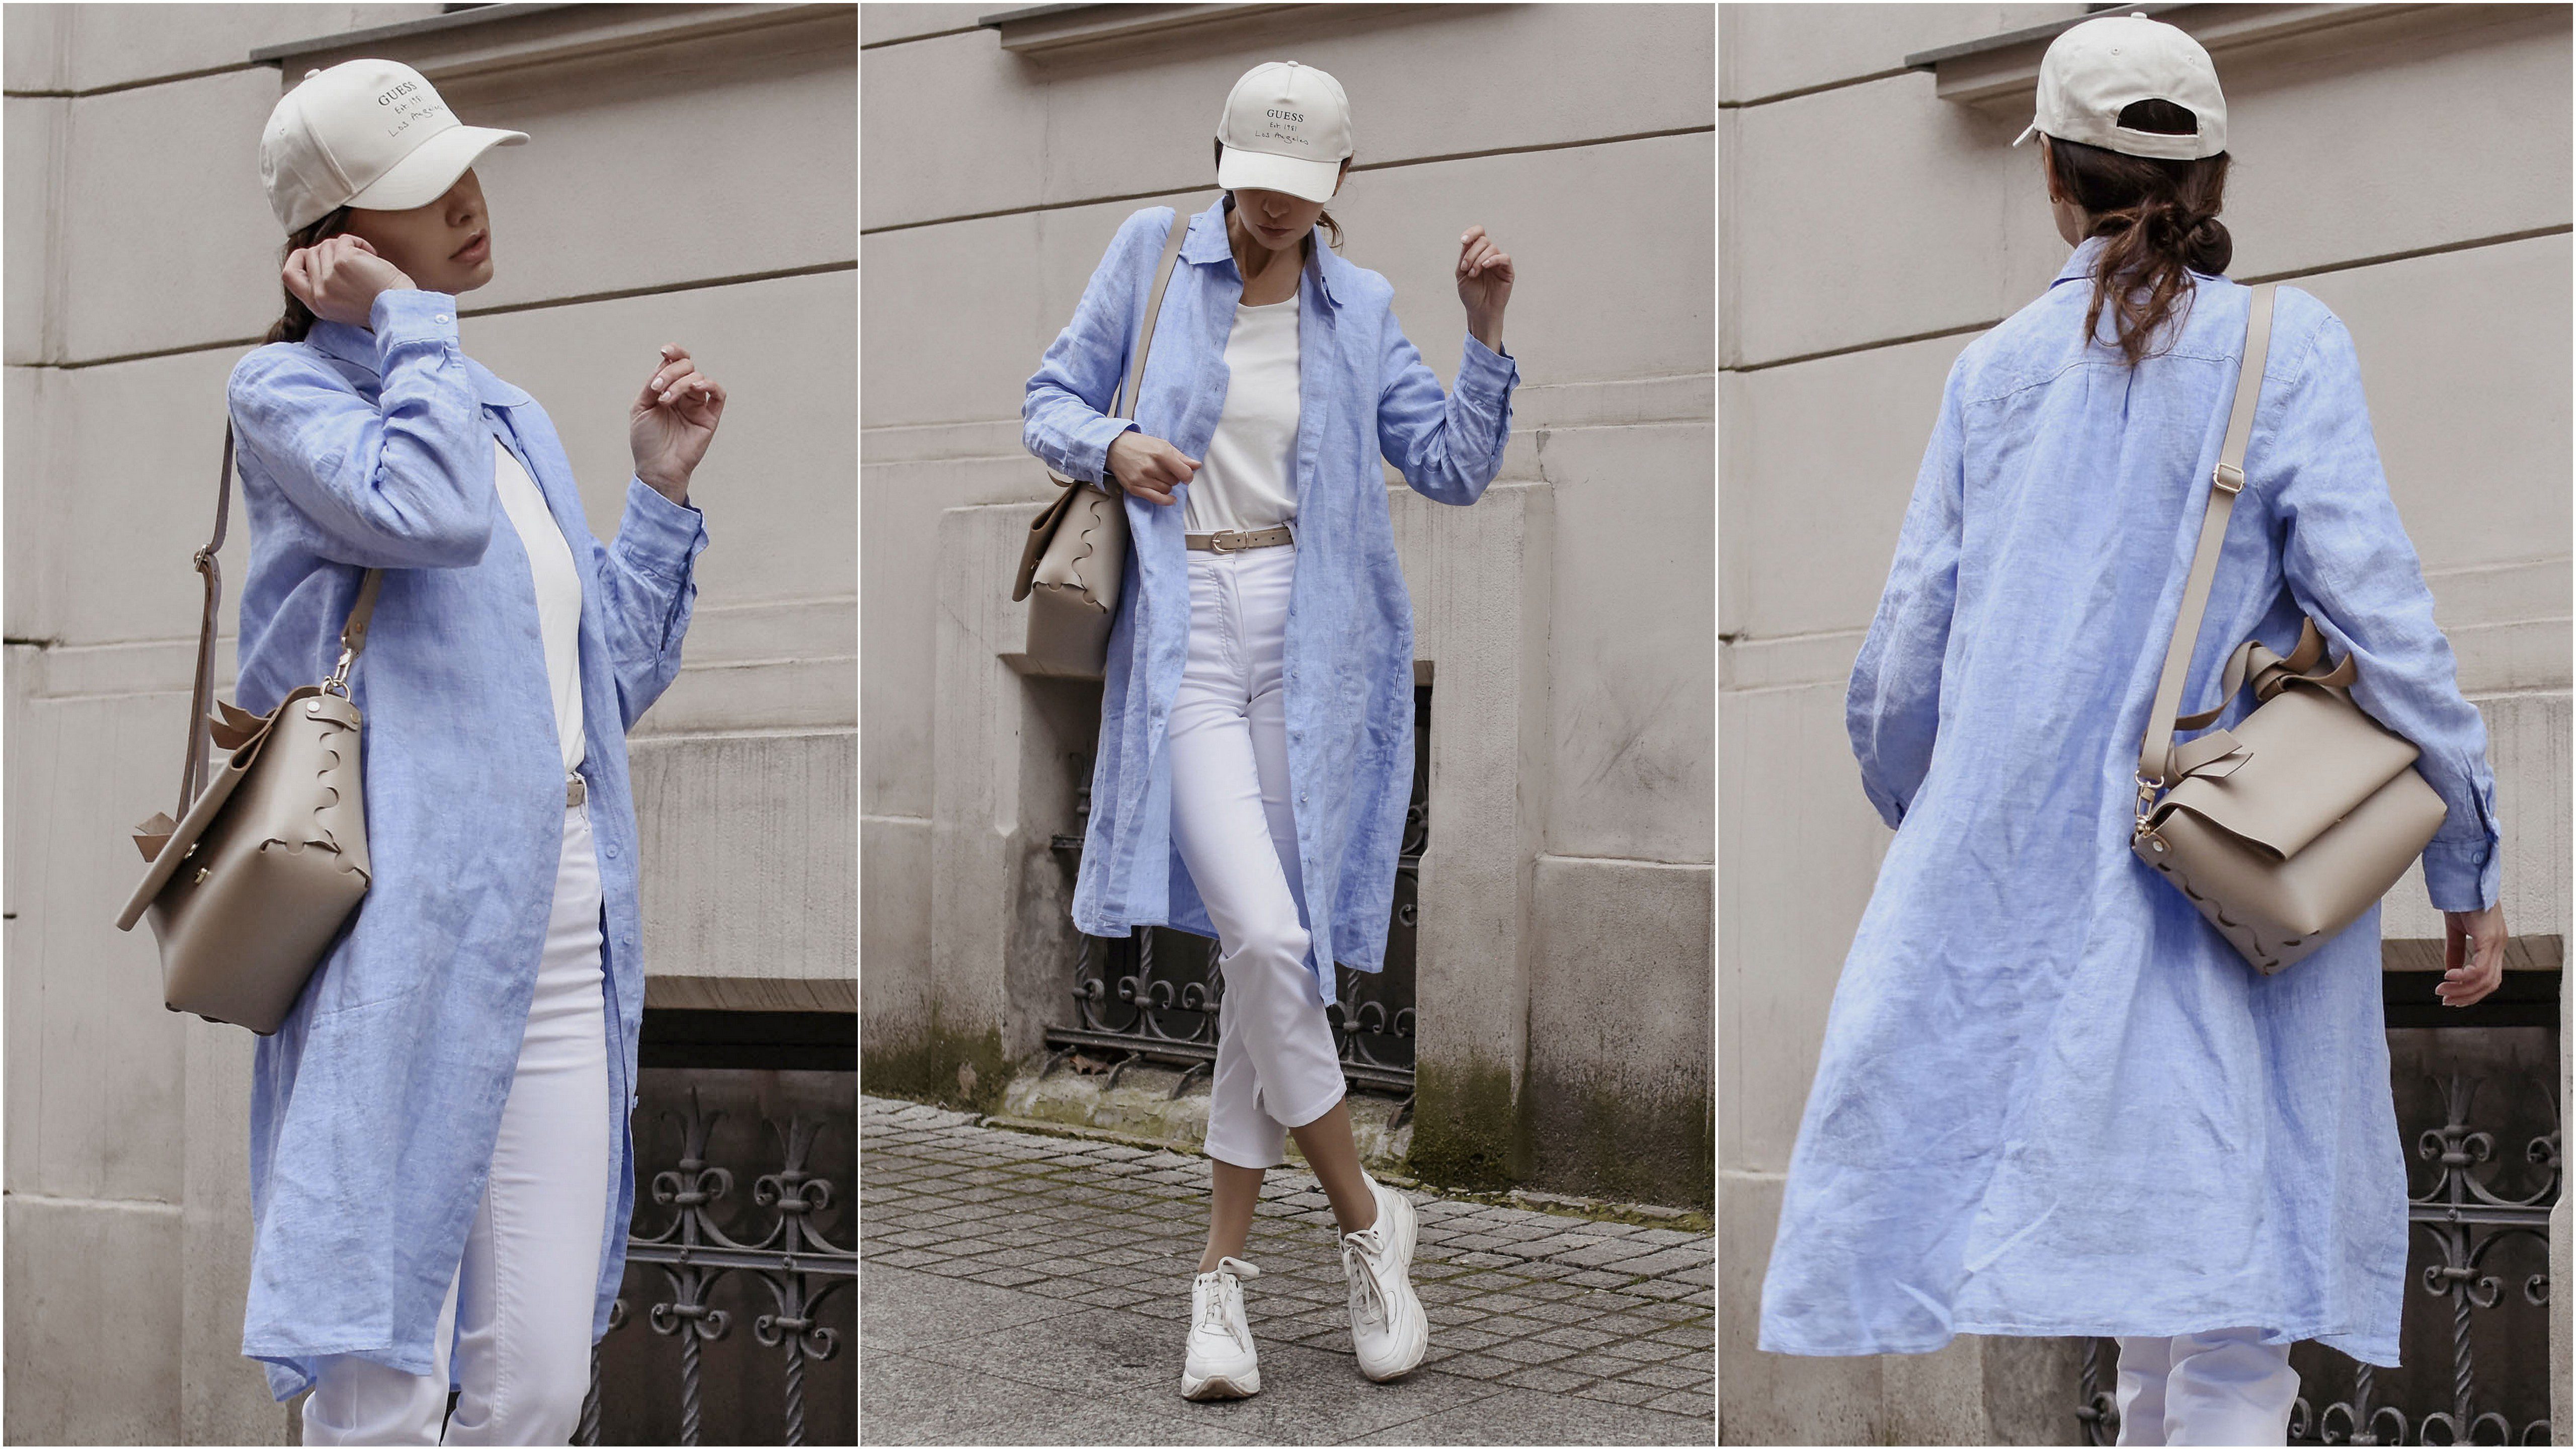 Influencer Aga loves the summer linen dress from Olsen's Dolce Vita collection.